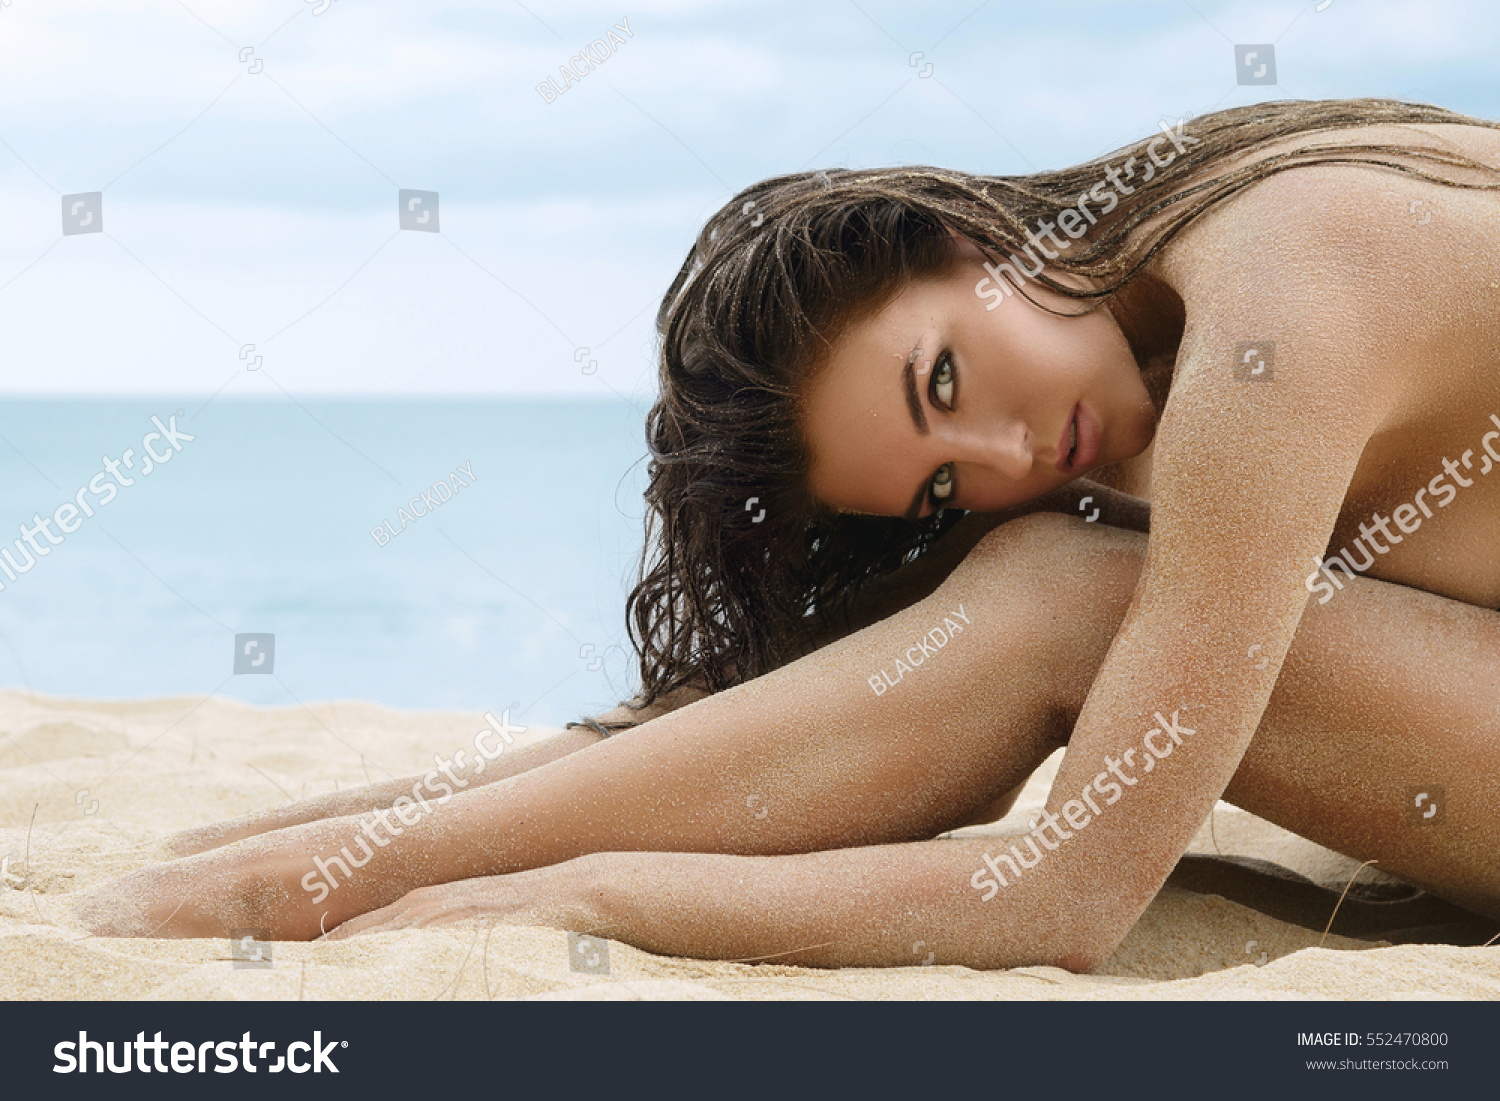 beautiful nude women on the beach